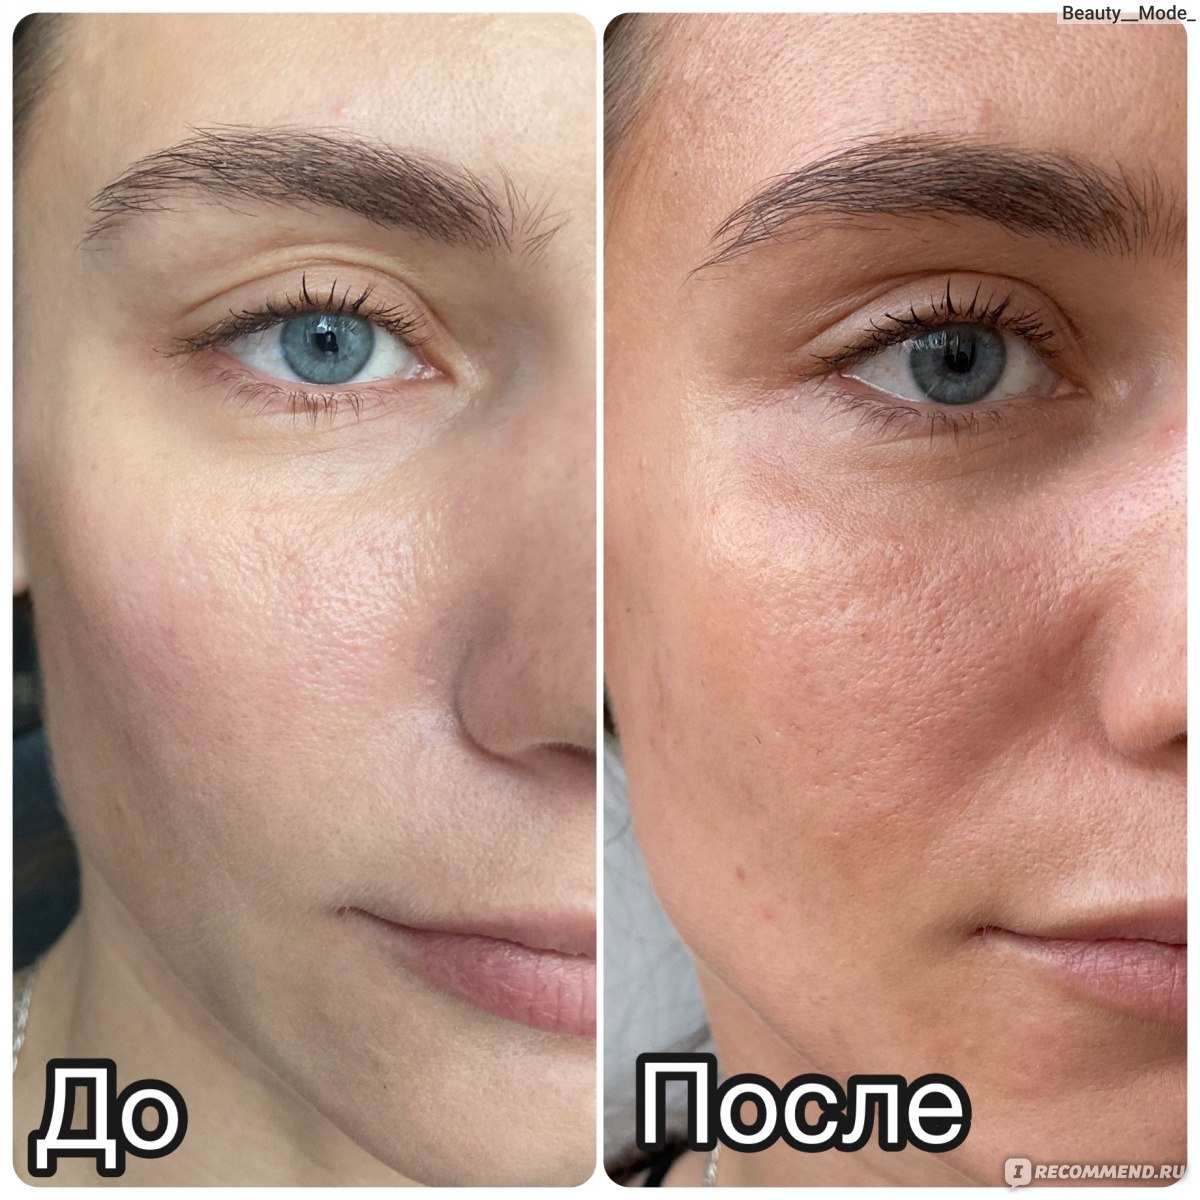 Бронзер на лице до и после